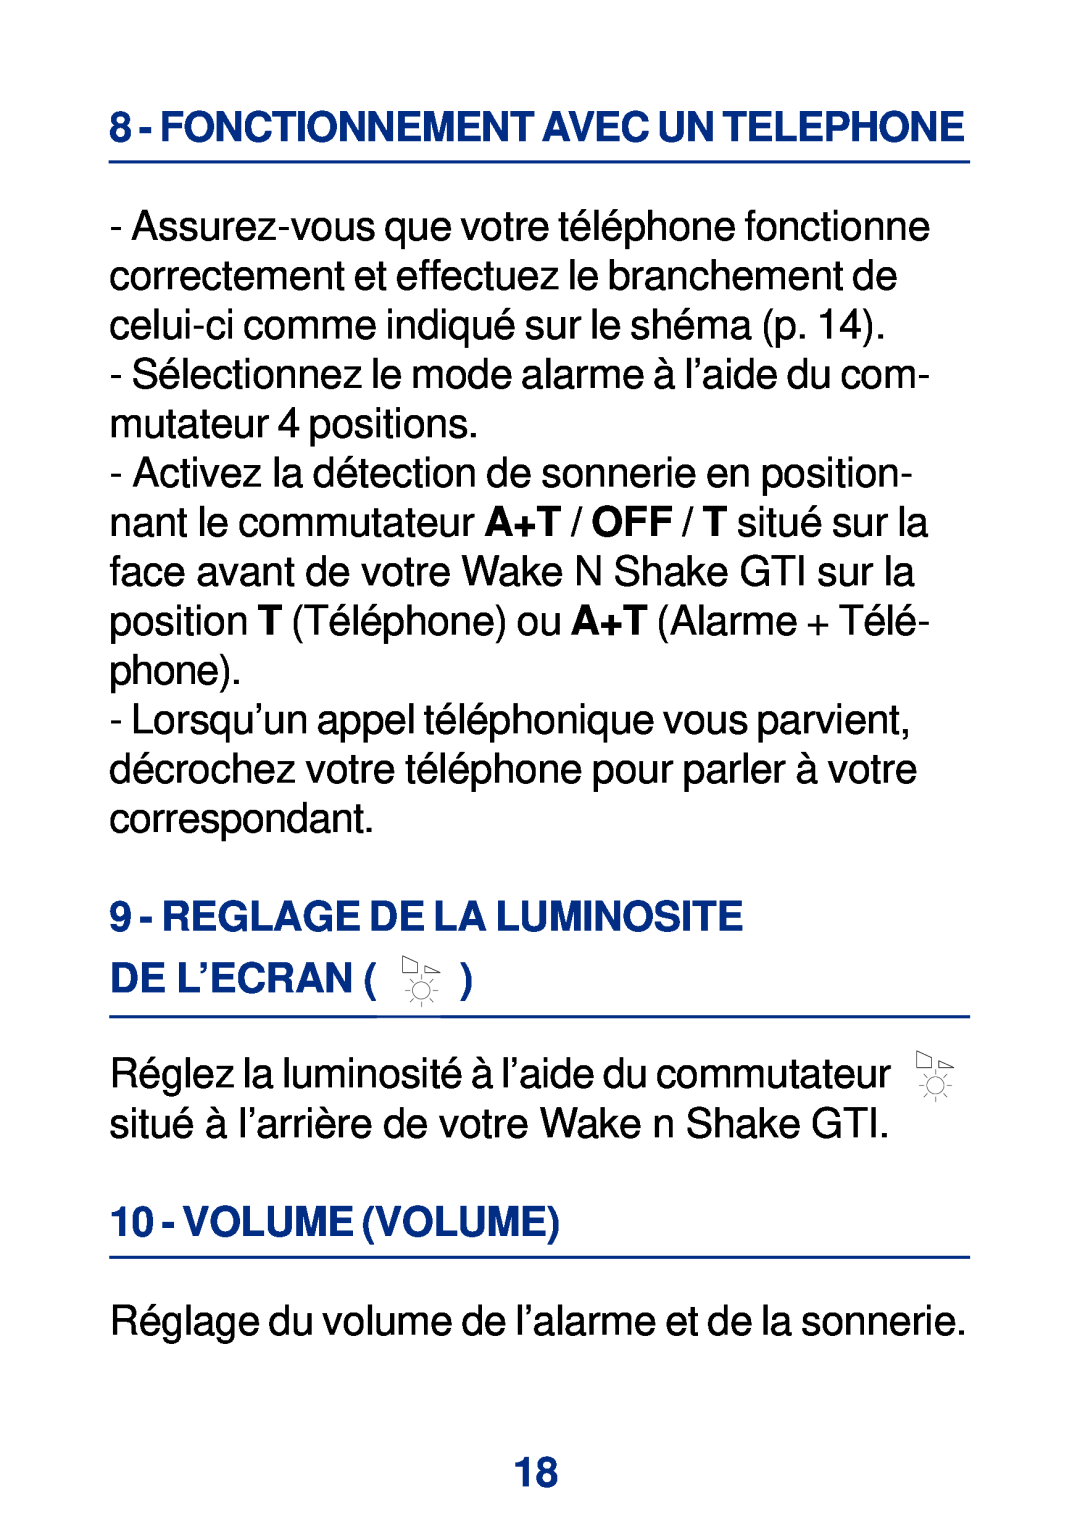 Geemarc Large Display Alarm Clock Fonctionnement Avec Un Telephone, Reglage De La Luminosite De L’Ecran, Volume Volume 